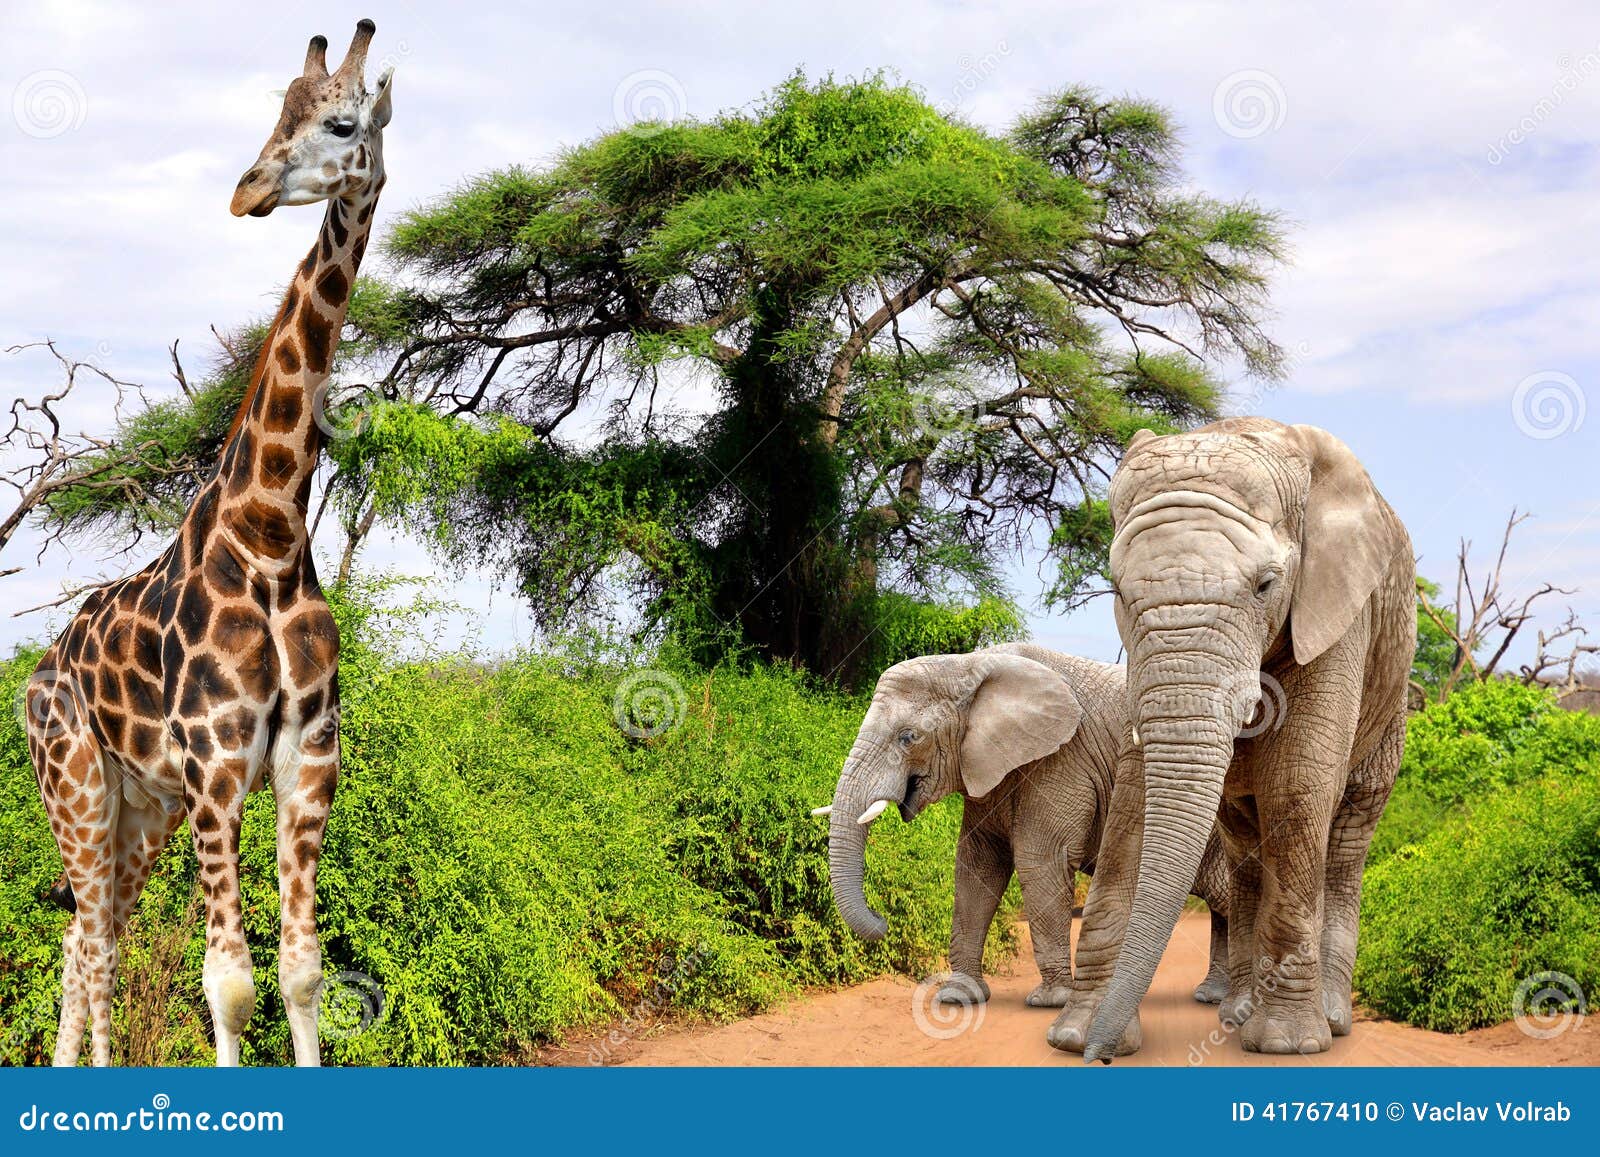 giraffe safari elephant